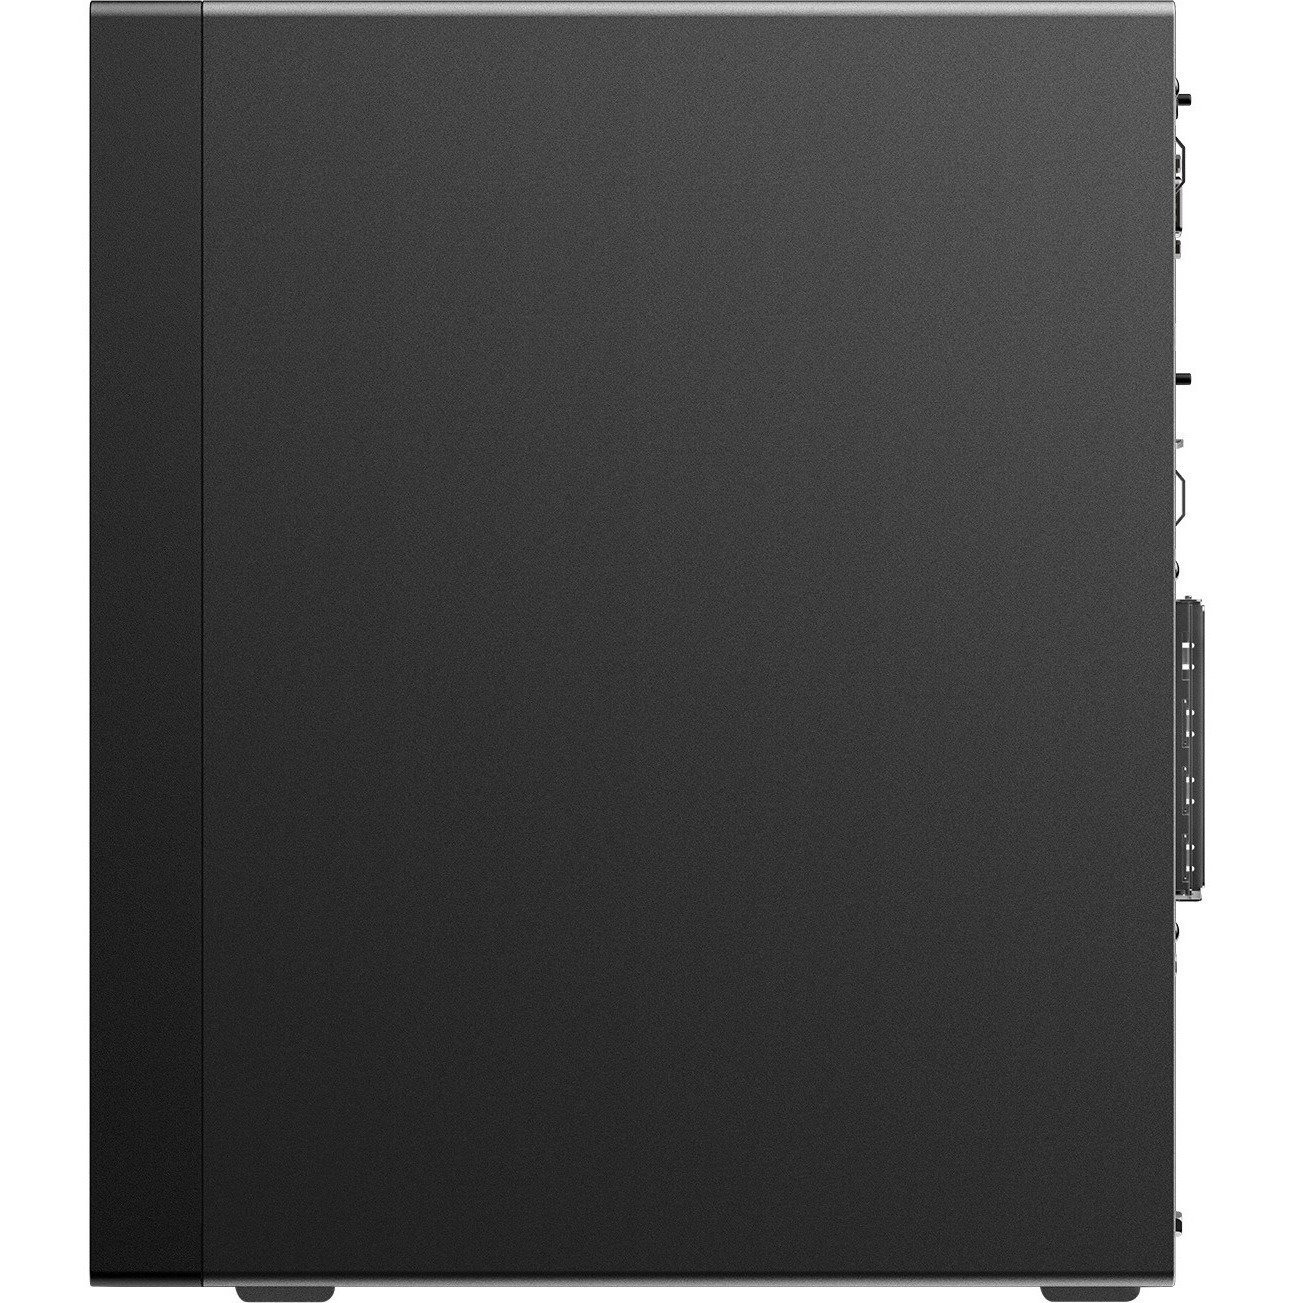 Lenovo ThinkStation P350 30E3009QUS Workstation - 1 x Intel Core i9 11th Gen i9-11900 - 32 GB - 1 TB SSD - Tower